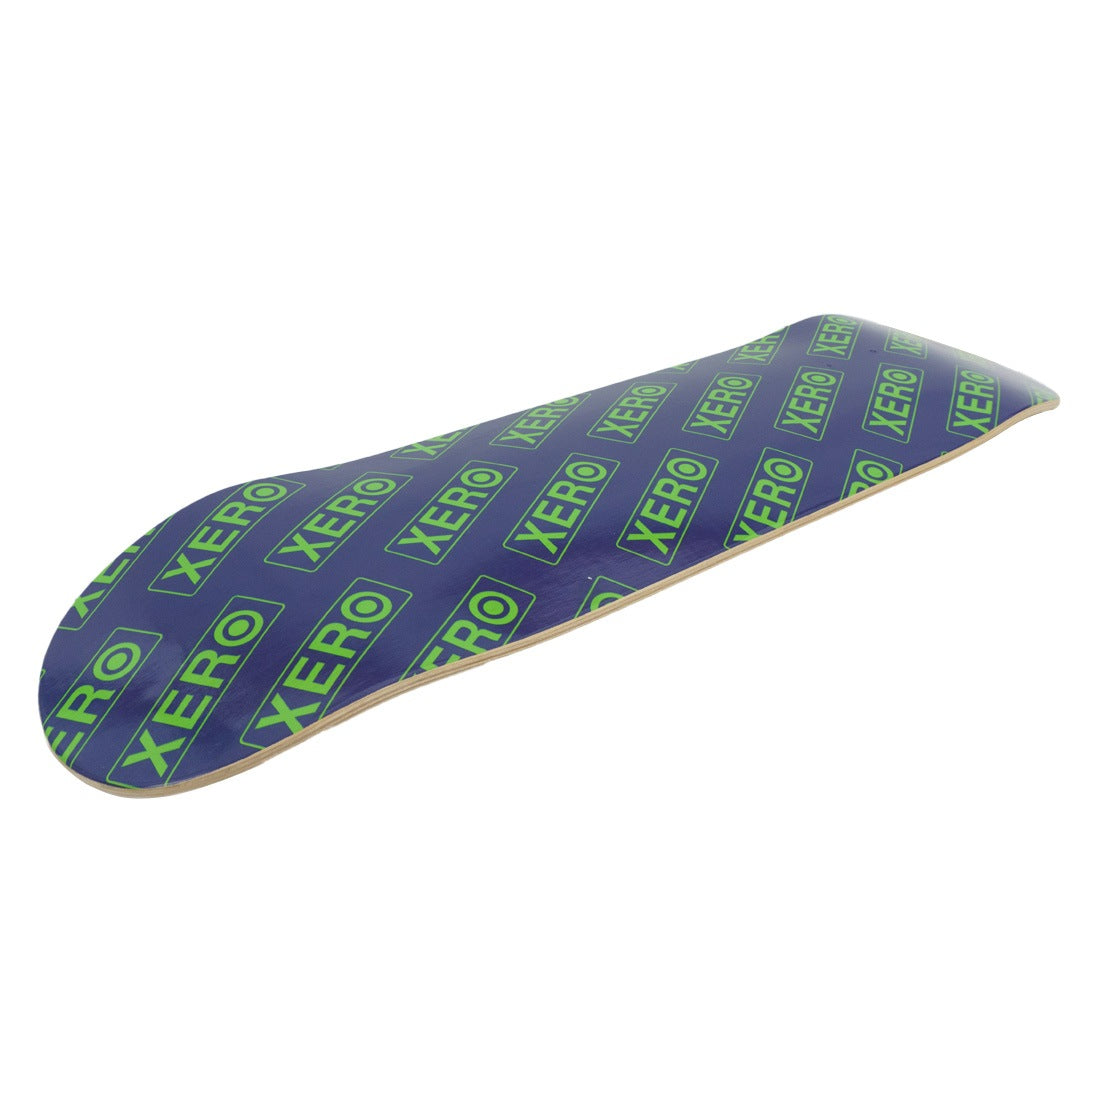 XERO Skateboard Deck - Repeat Logo Left View